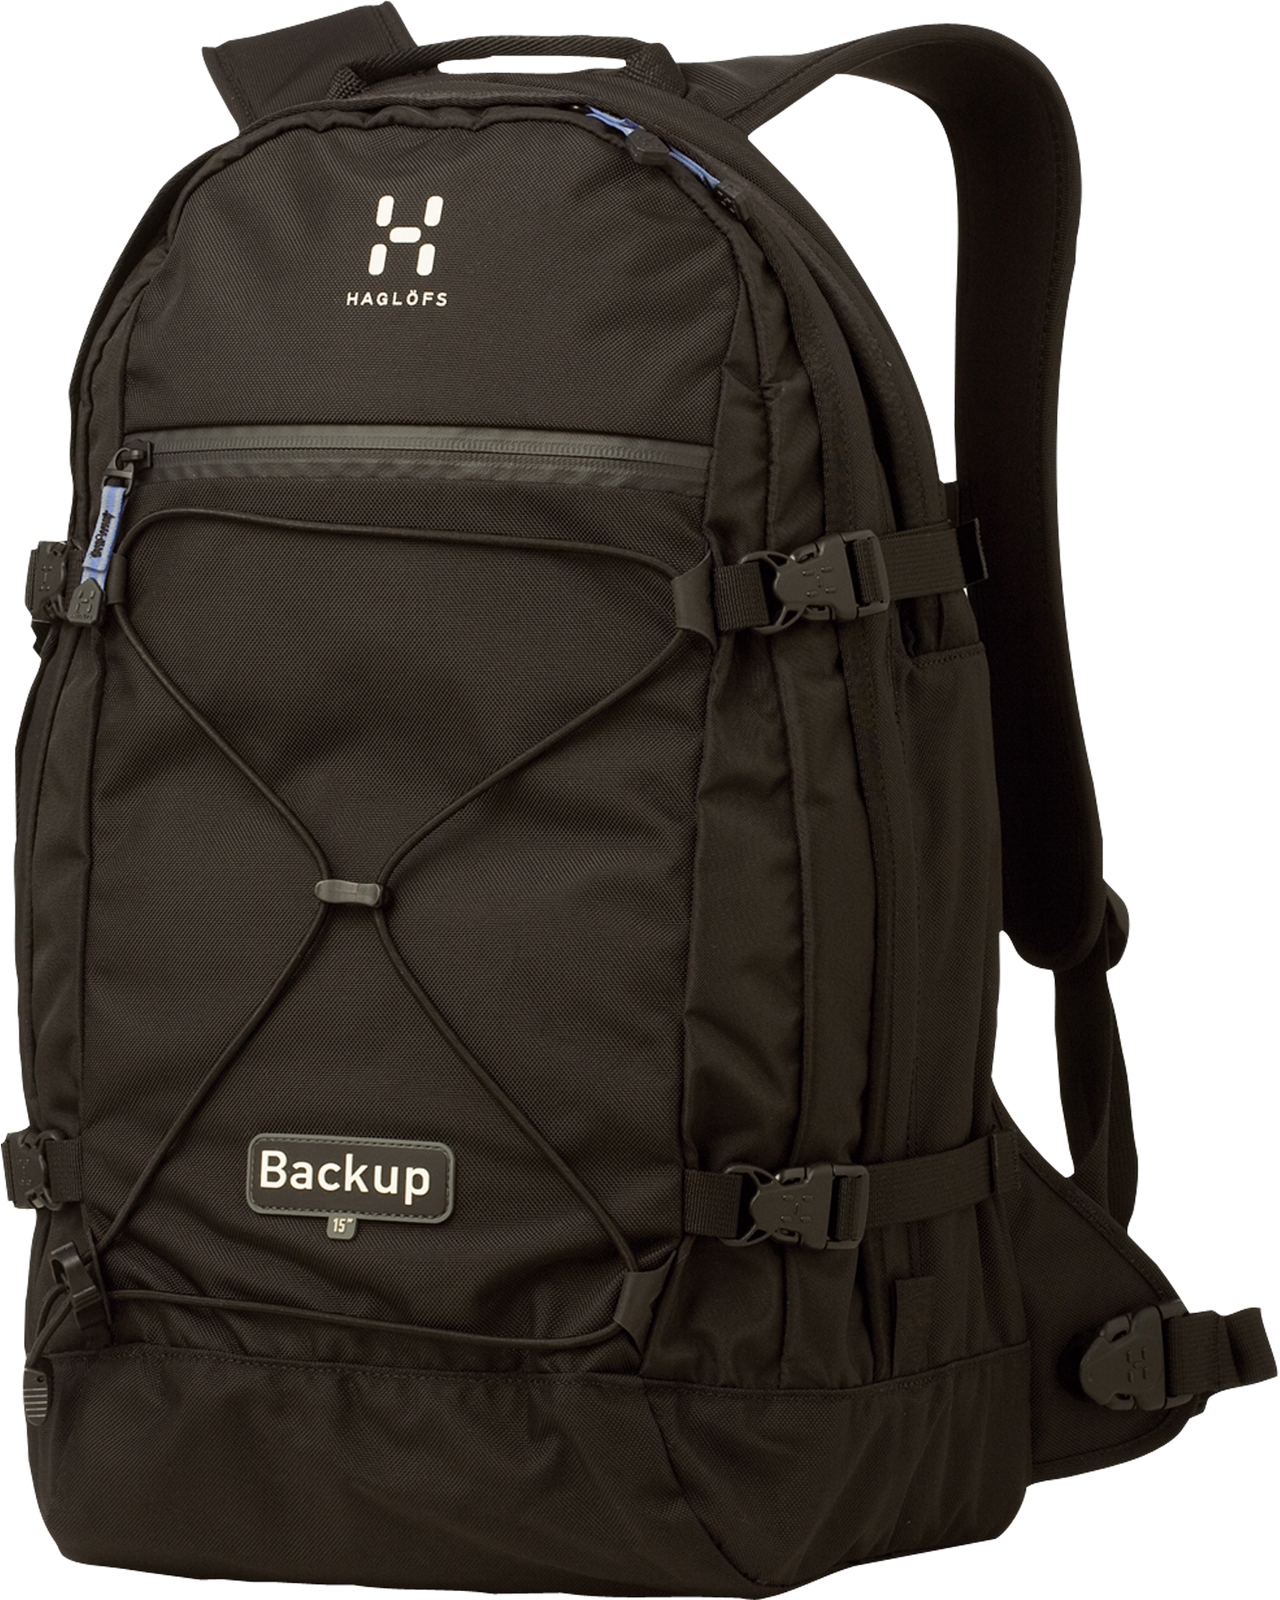 rol Scheiding Beweging Backpacks Heaven: Haglofs - Backup 15" Laptop Backpack